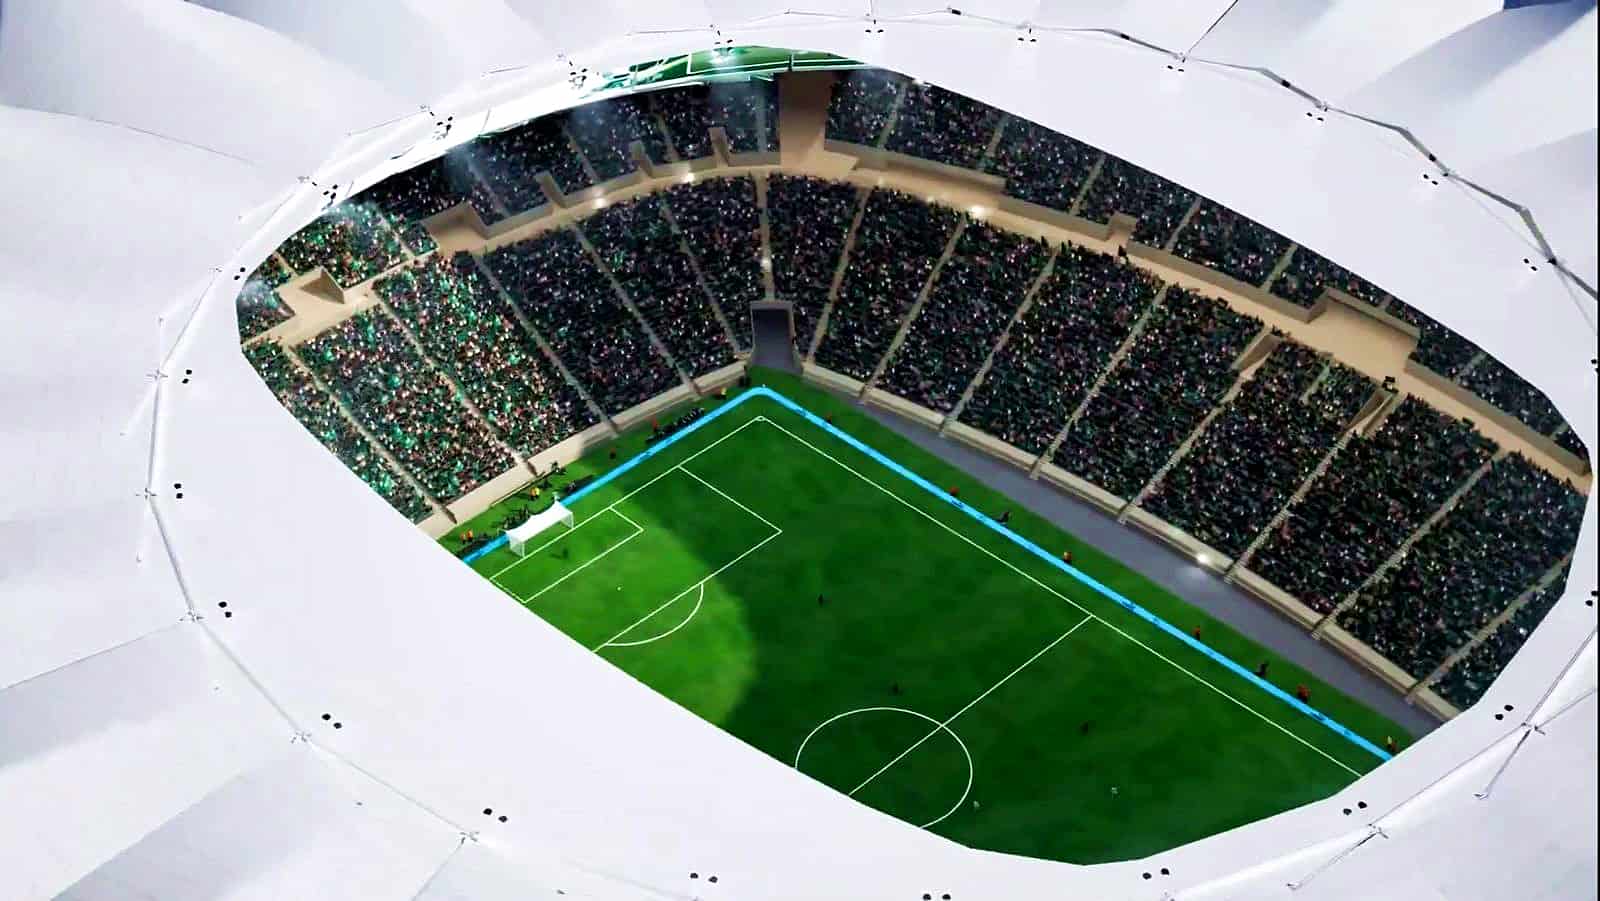 King Fahd Intl Sports City design revealed